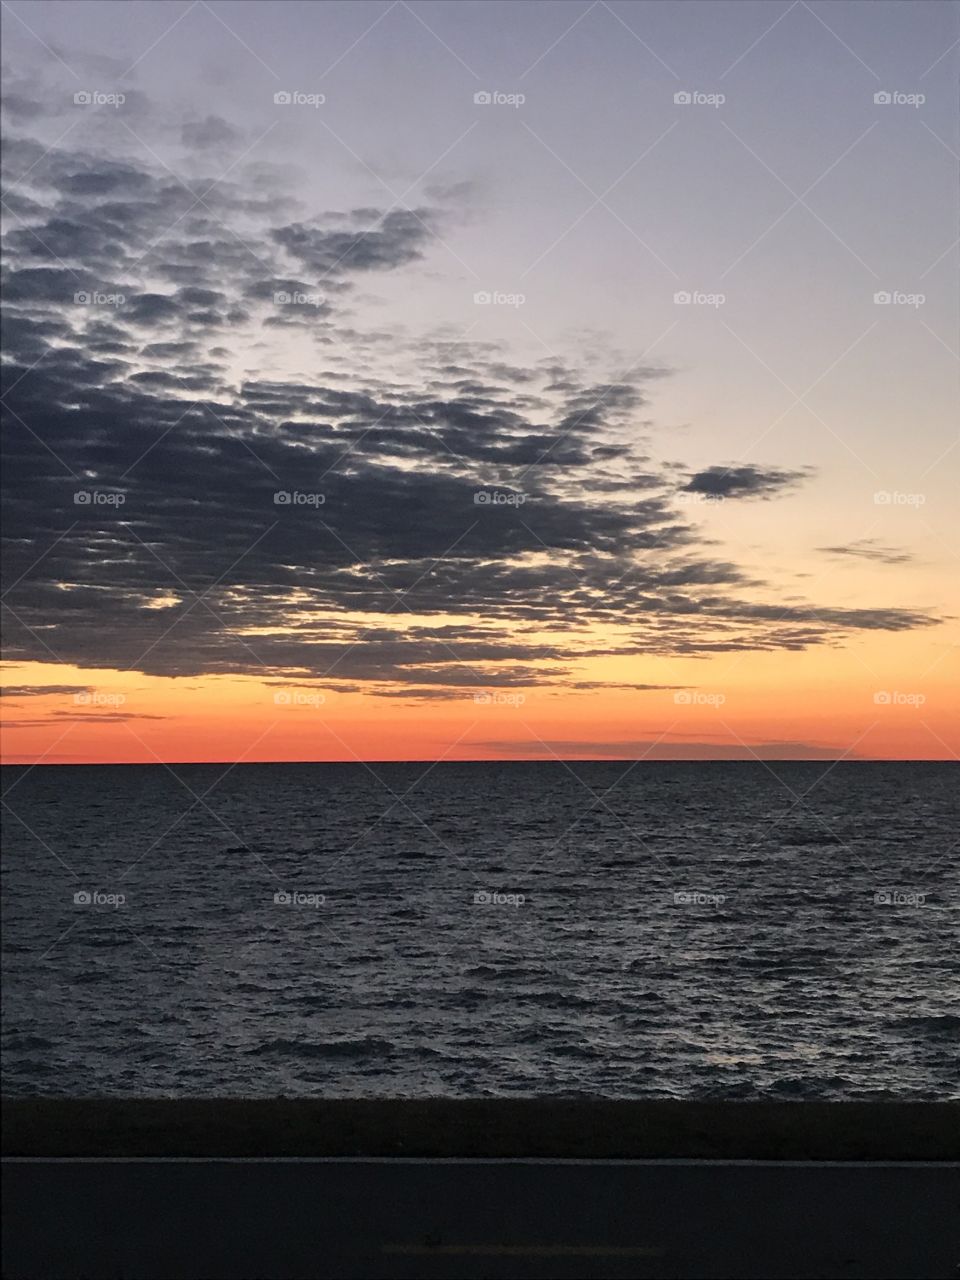 A sunrise over Lake Michigan 